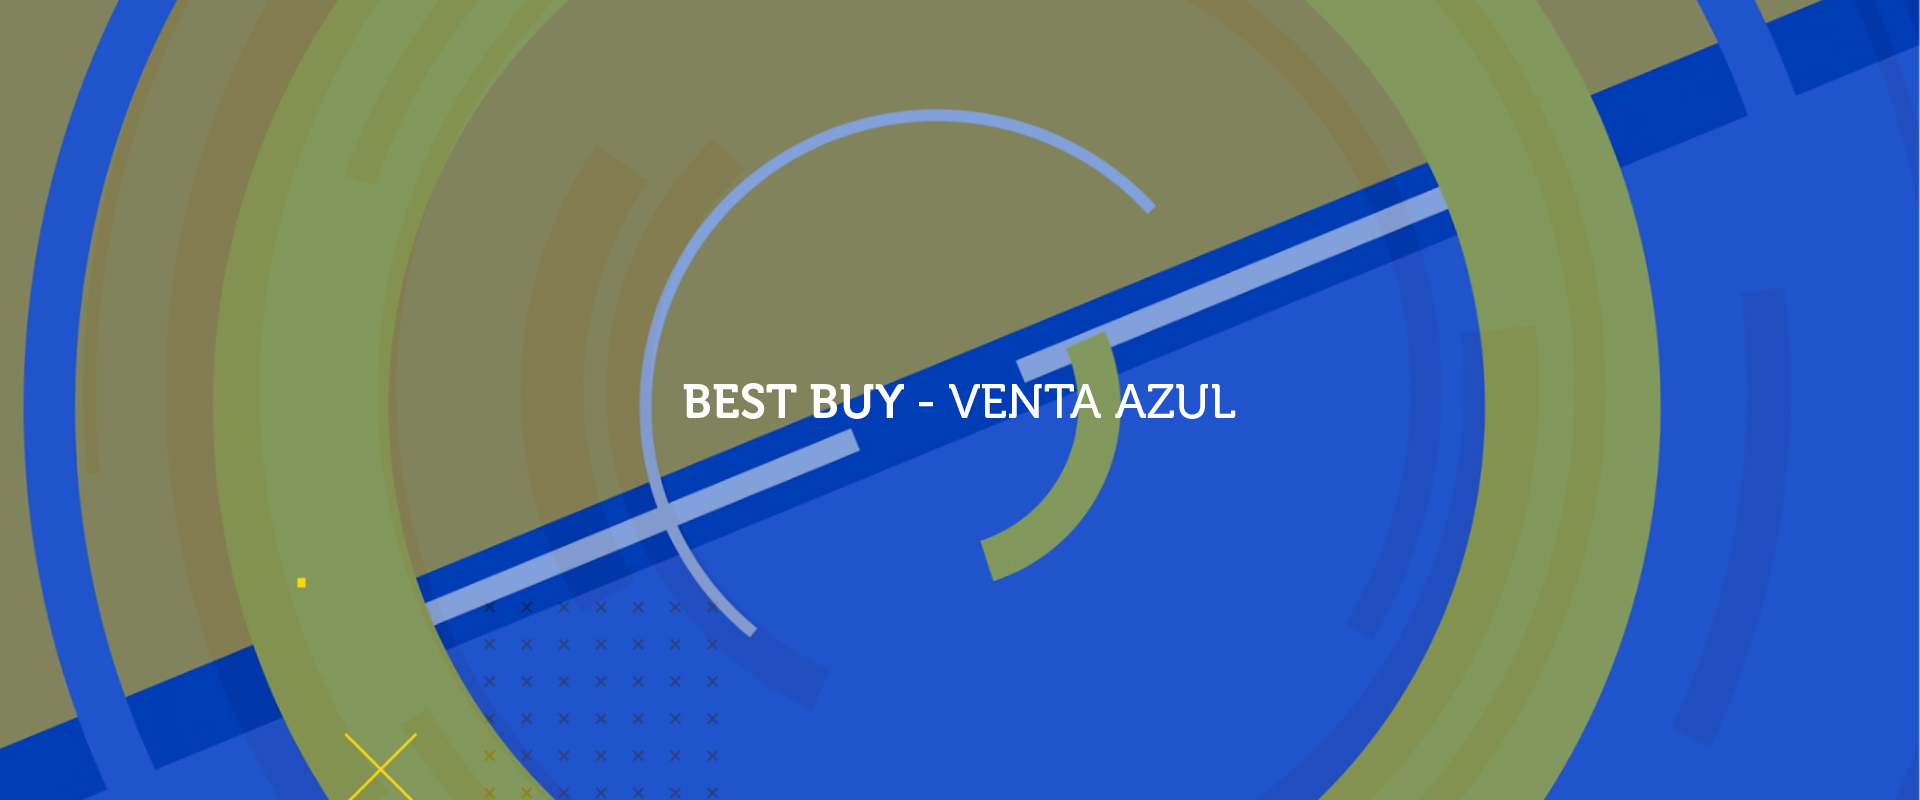 Best Buy- Venta Azul